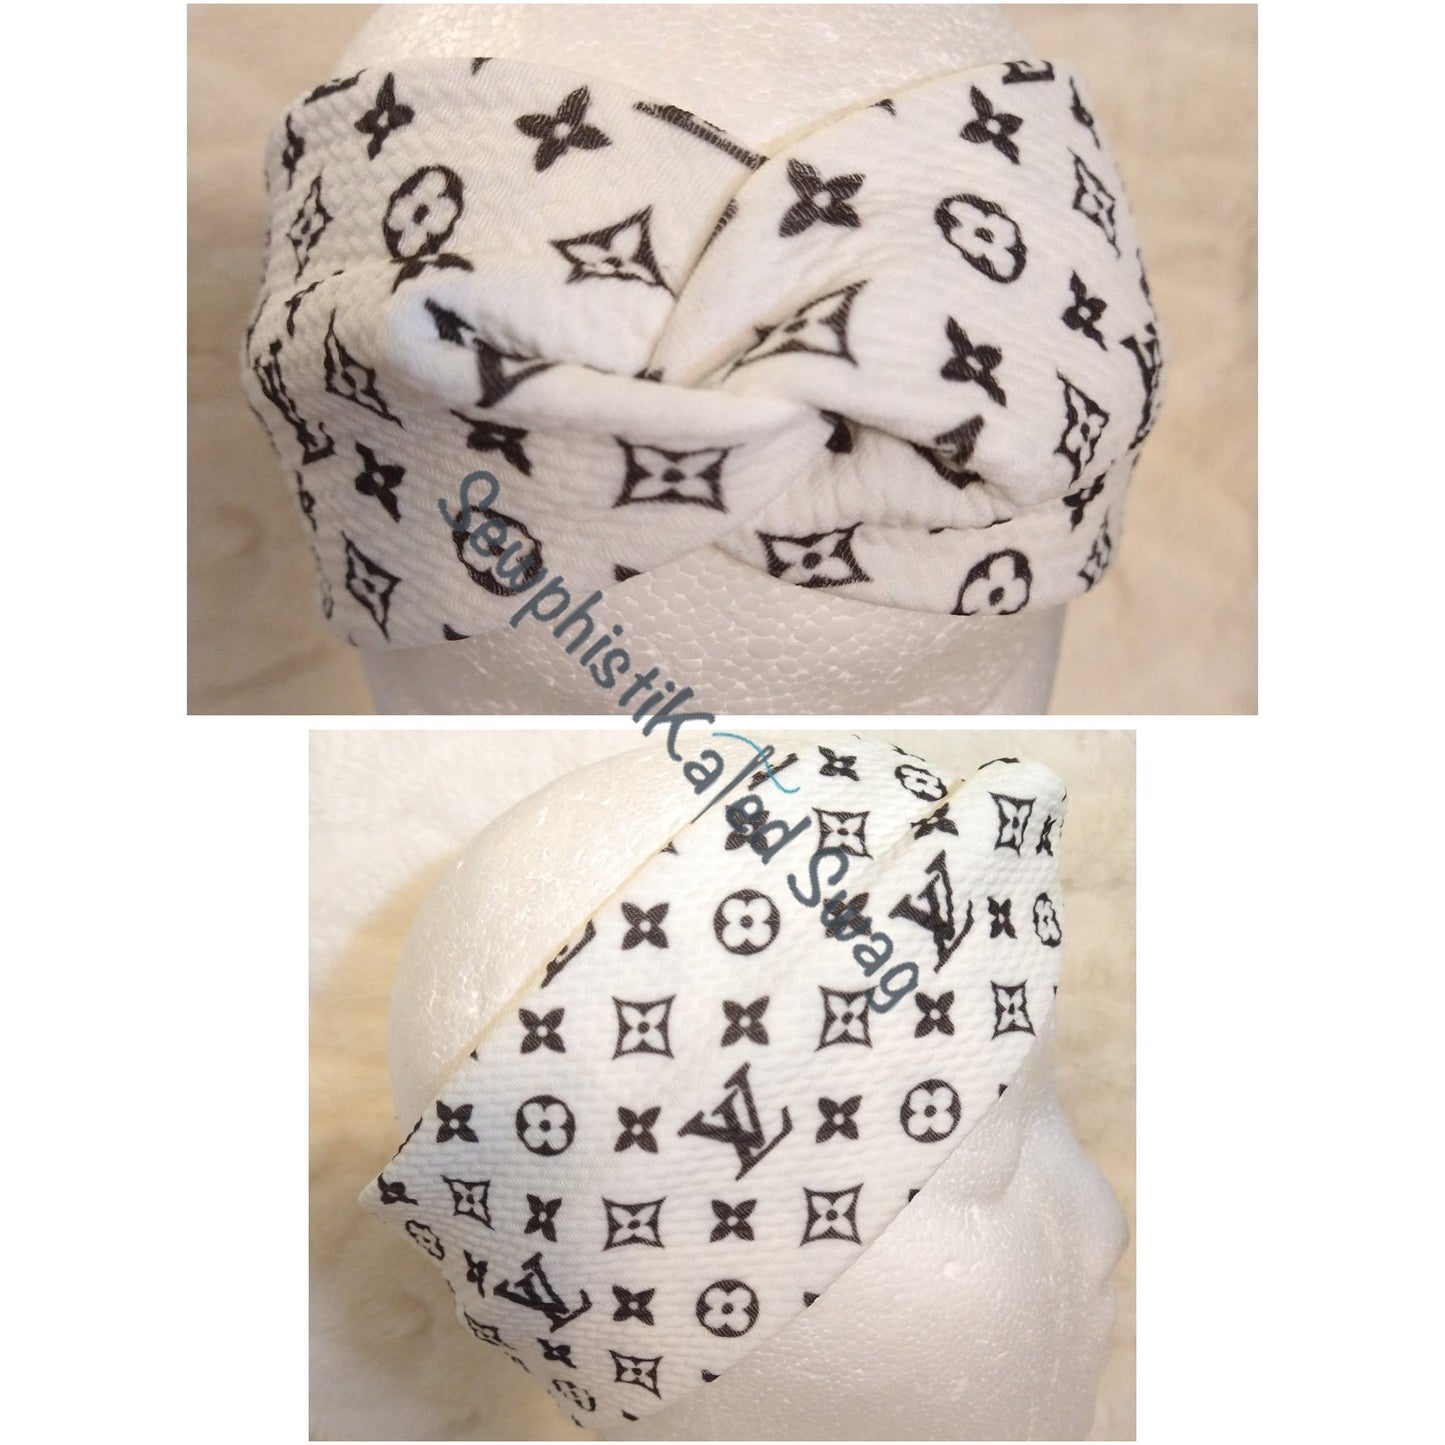 Black on White Monogram Bougie Headbands & Scrunchies